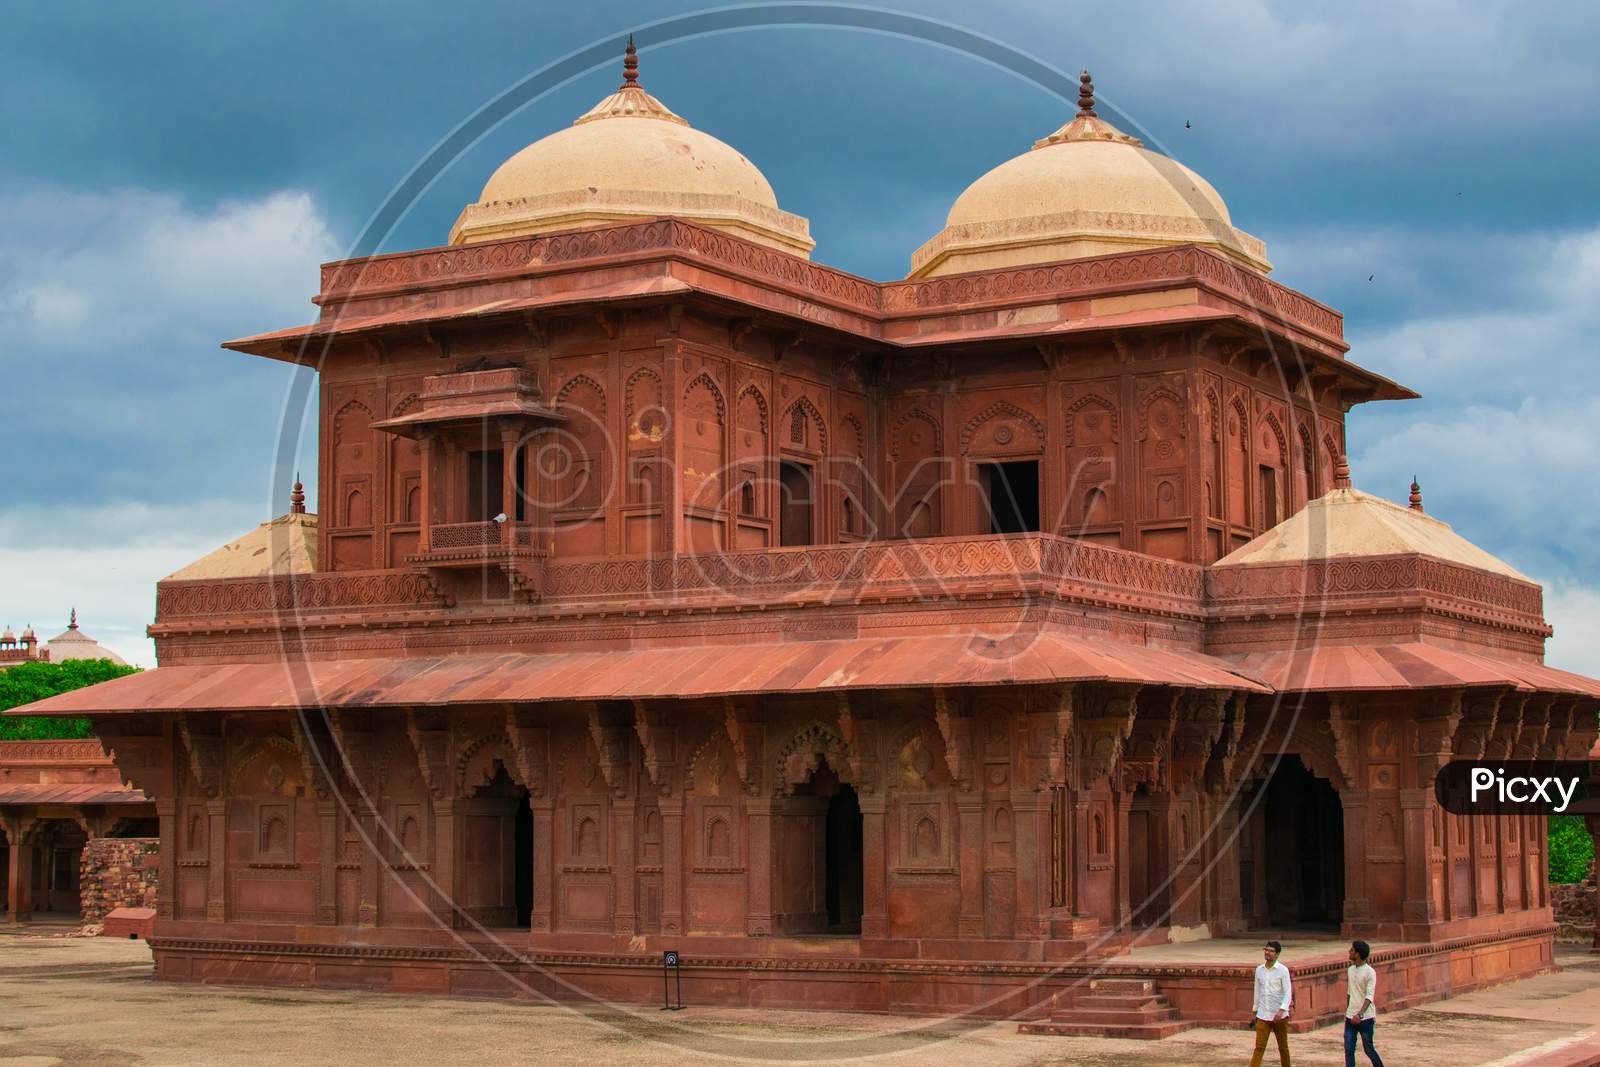 Jodha Bai Palace built by Akbar In Fatehpur Sikri